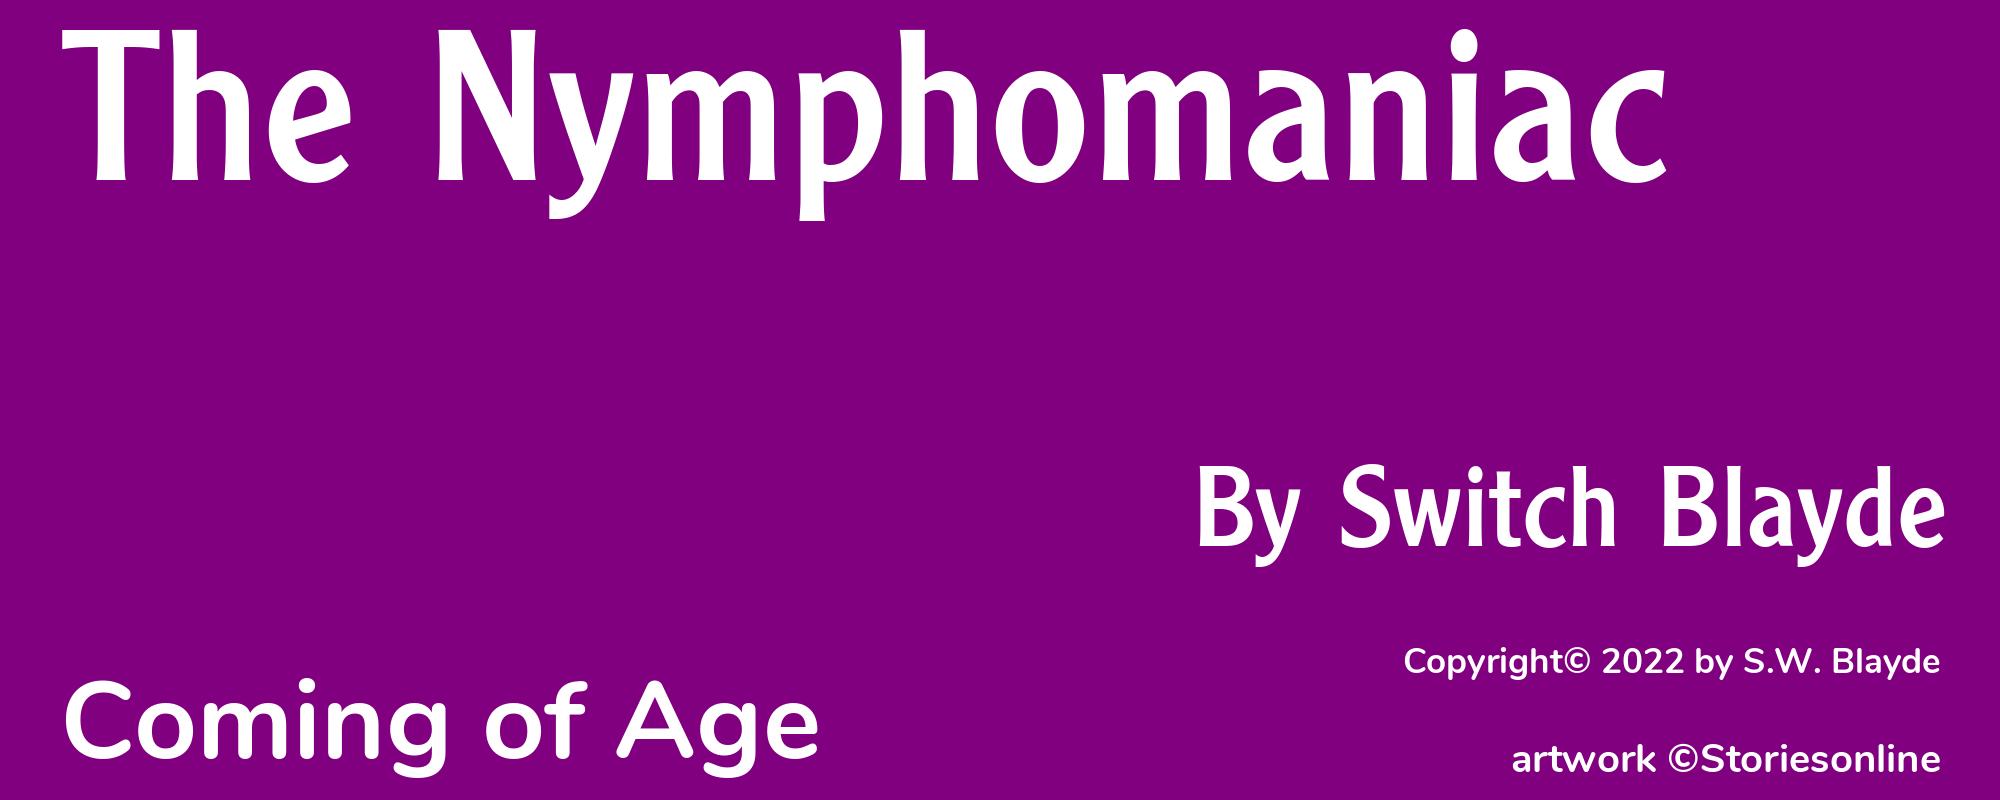 The Nymphomaniac - Cover